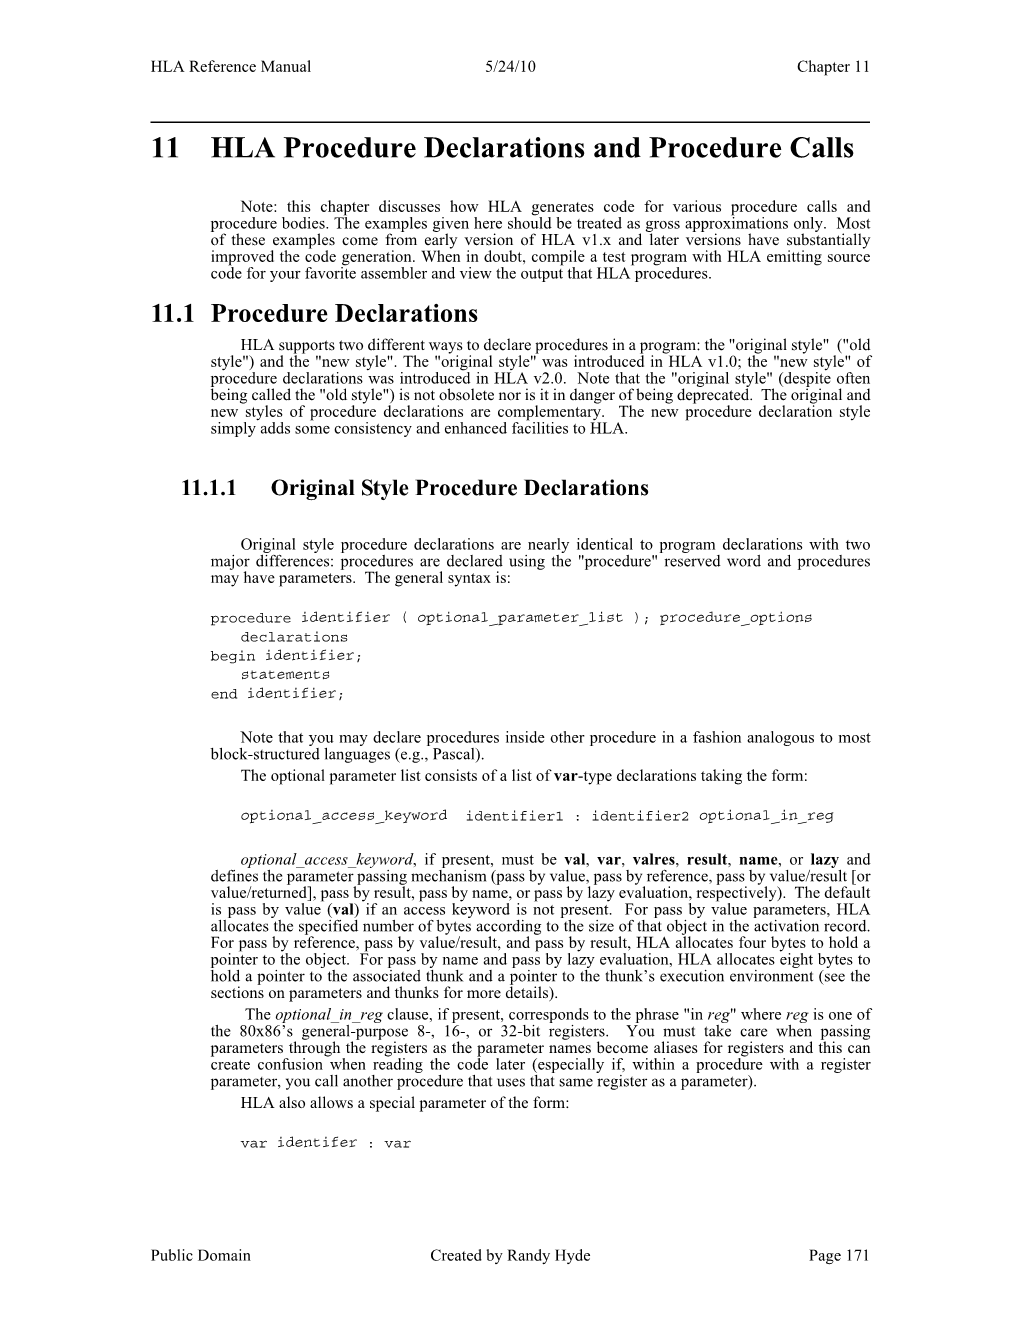 11 HLA Procedure Declarations and Procedure Calls